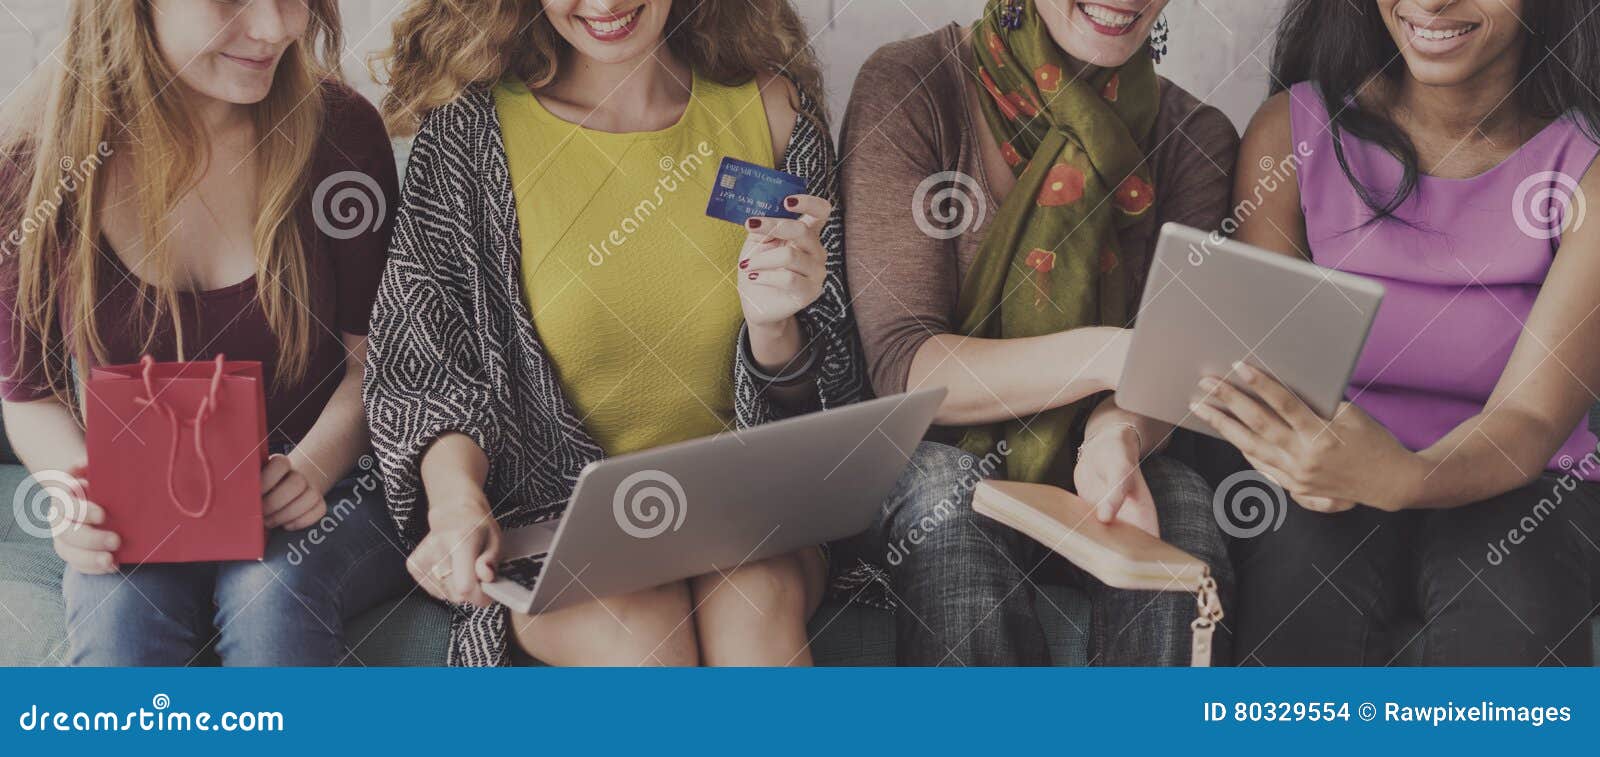 girls friendship togetherness online shopping concept